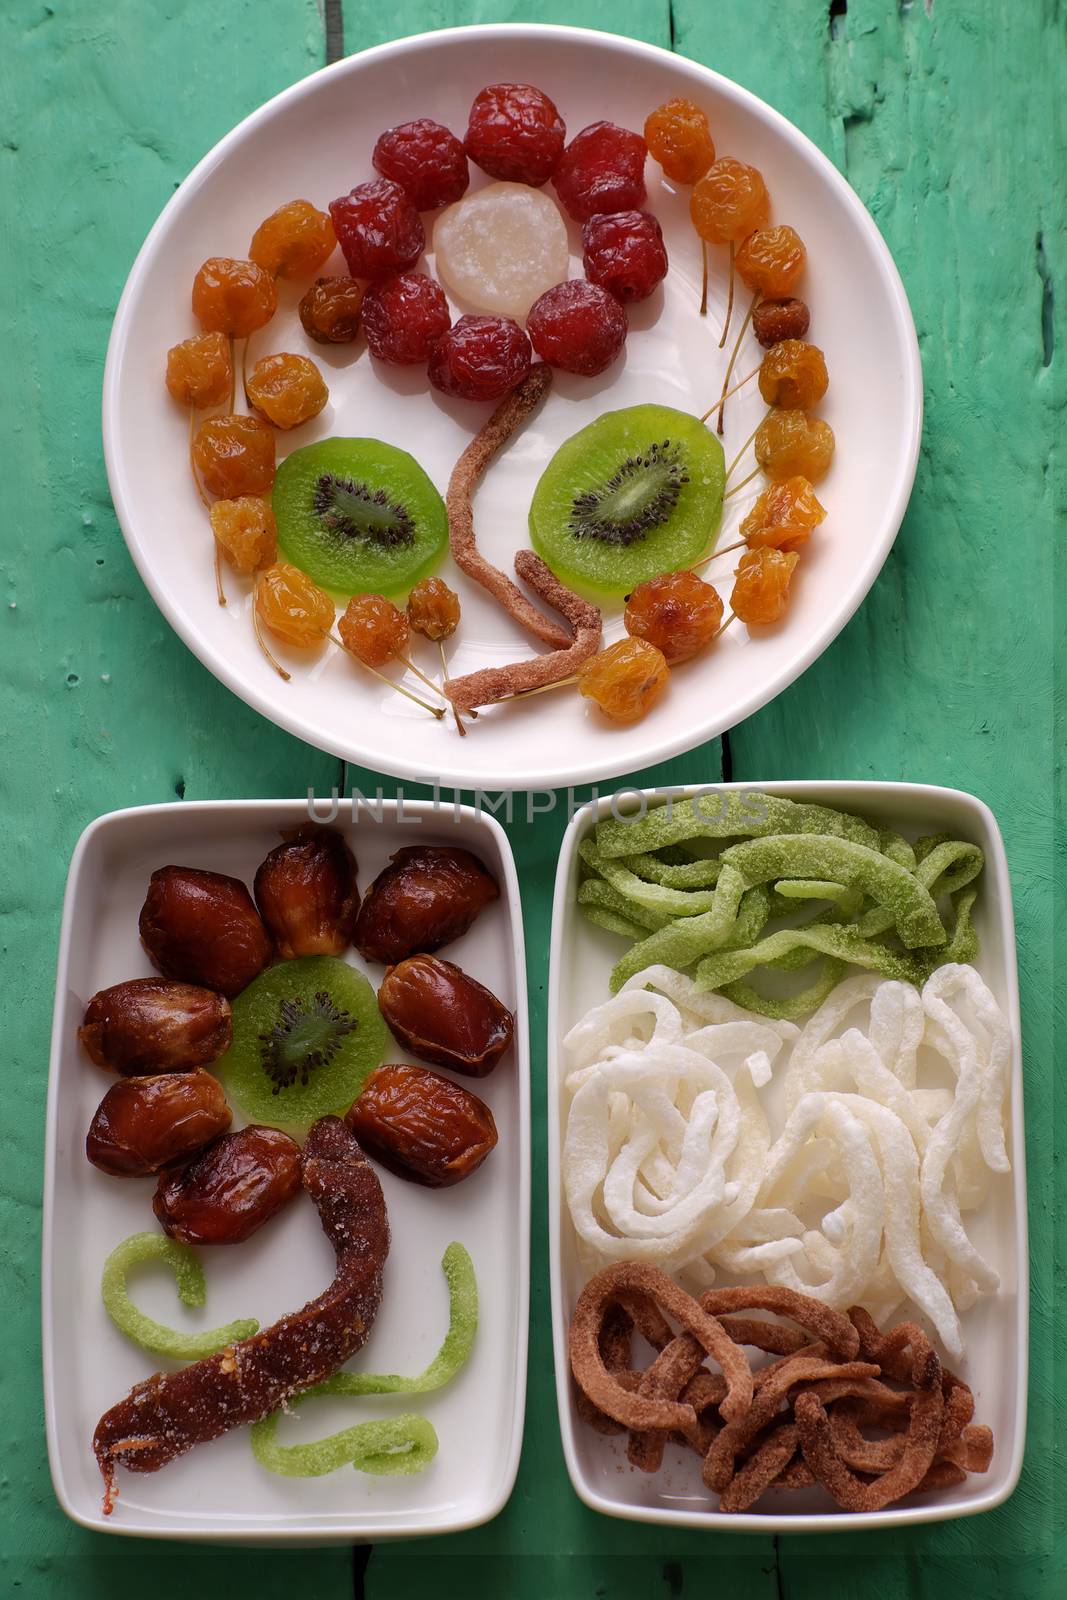 Vietnamese jam for Vietnam Tet holiday by xuanhuongho